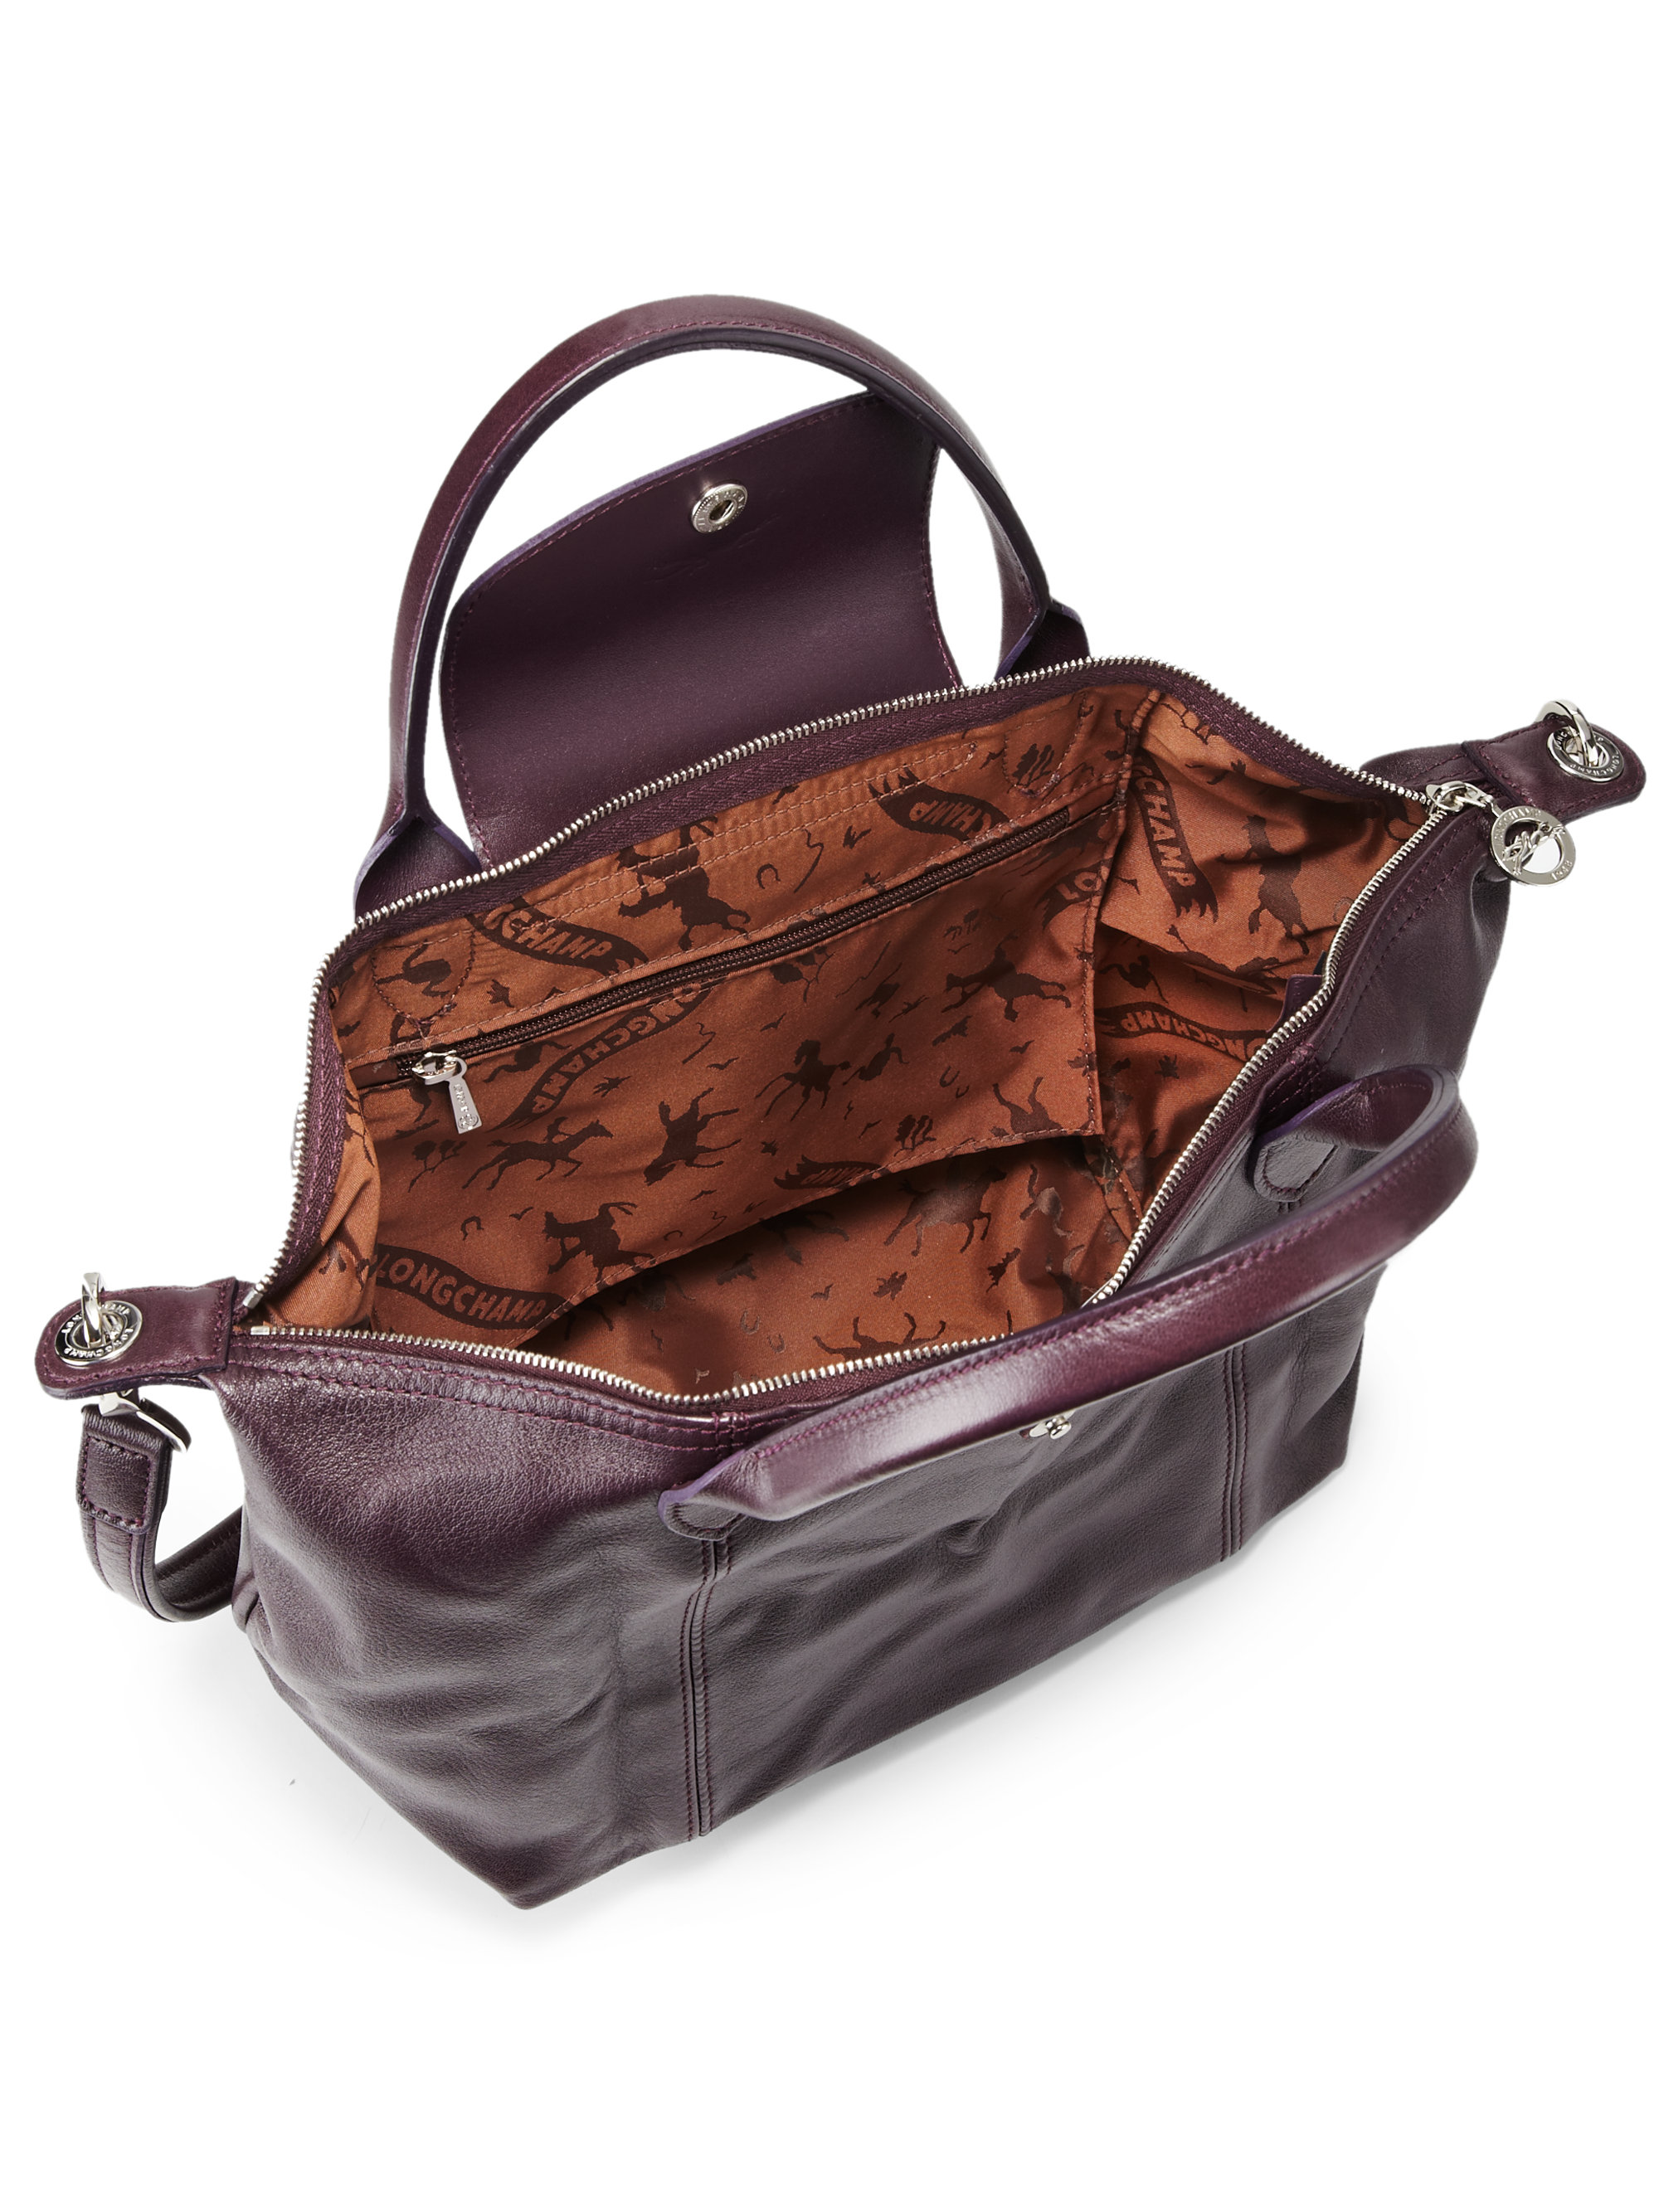 Longchamp Le Pliage Cuir Small Top Handle Bag in Violet (Purple) Lyst